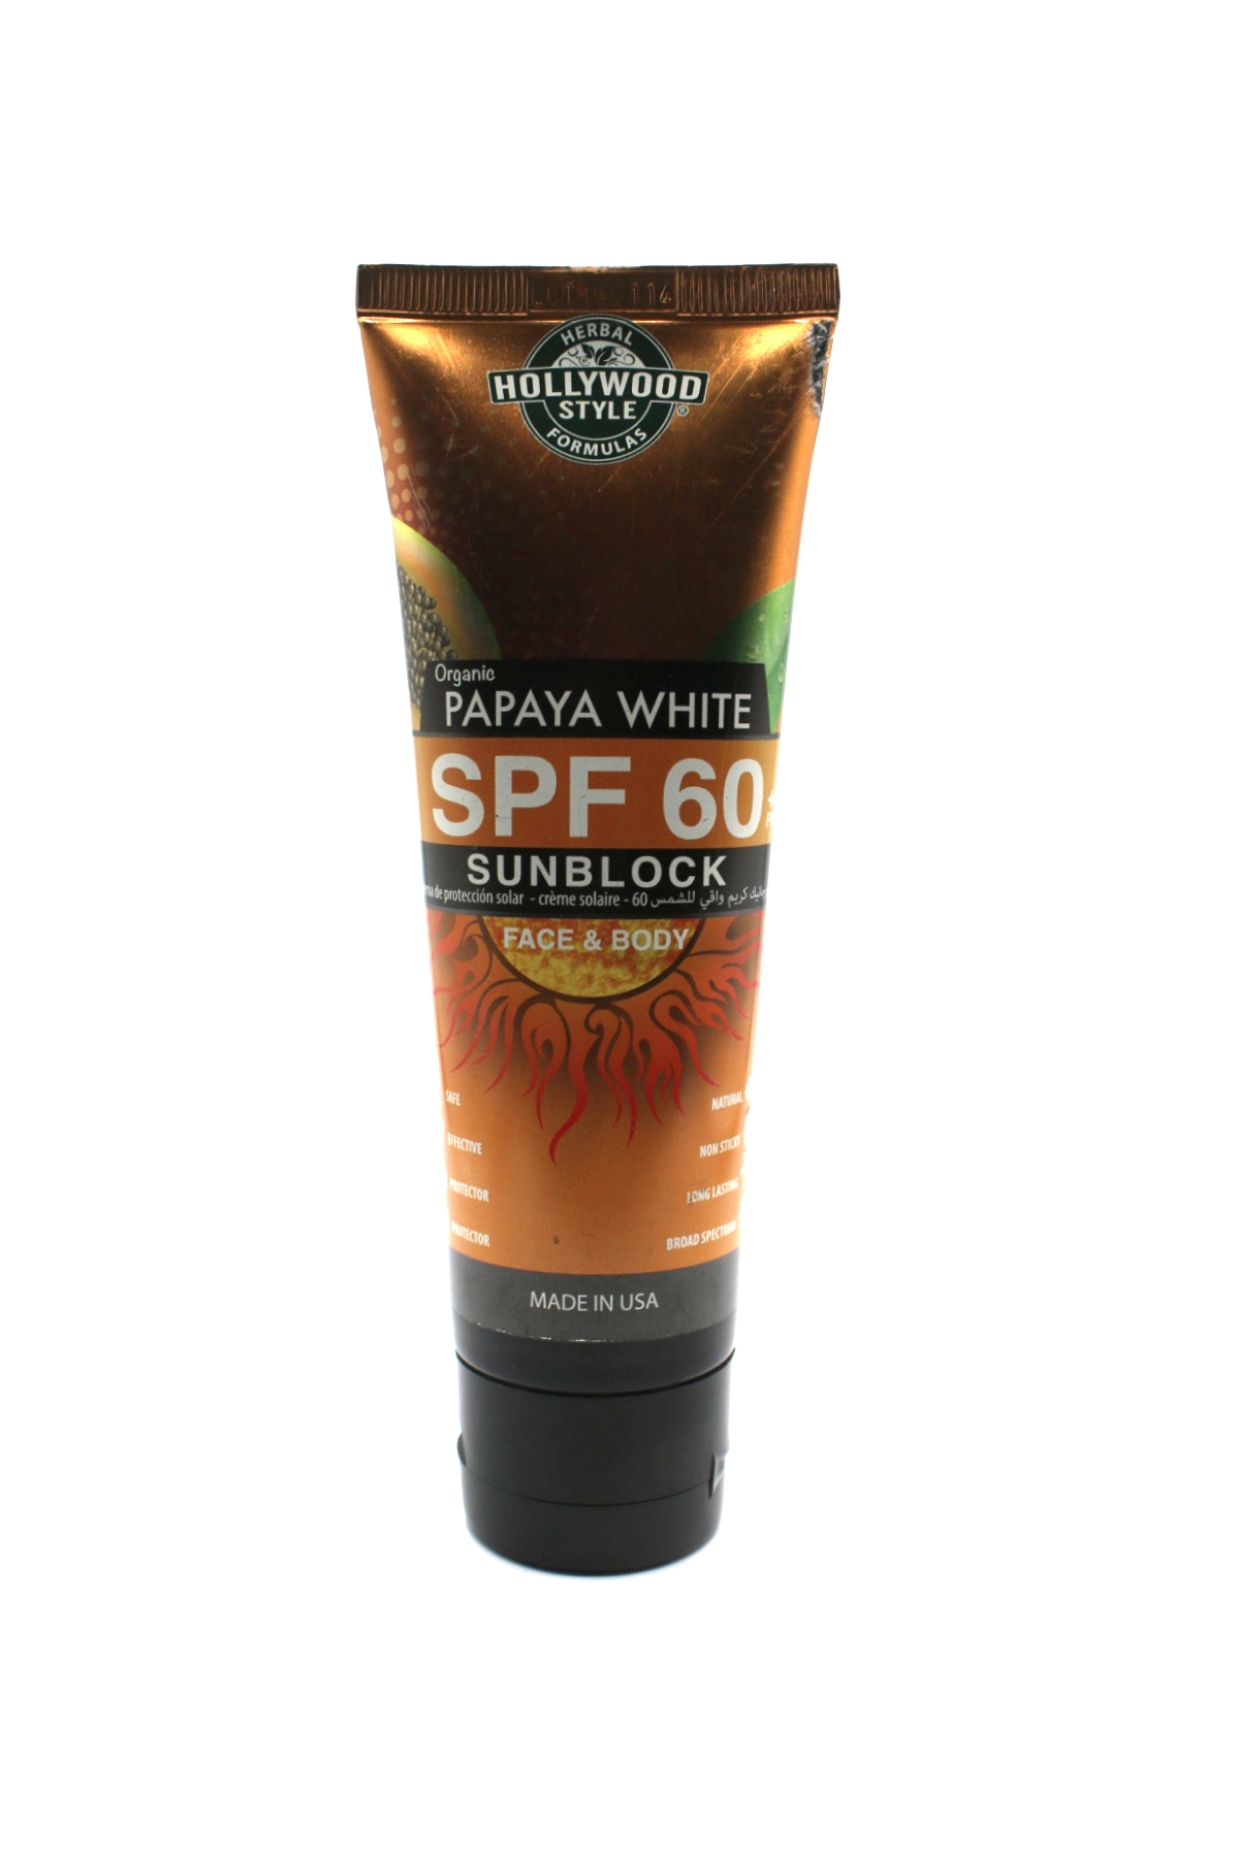 HOLLYWOOD Sun Block SPF 60 Papaya